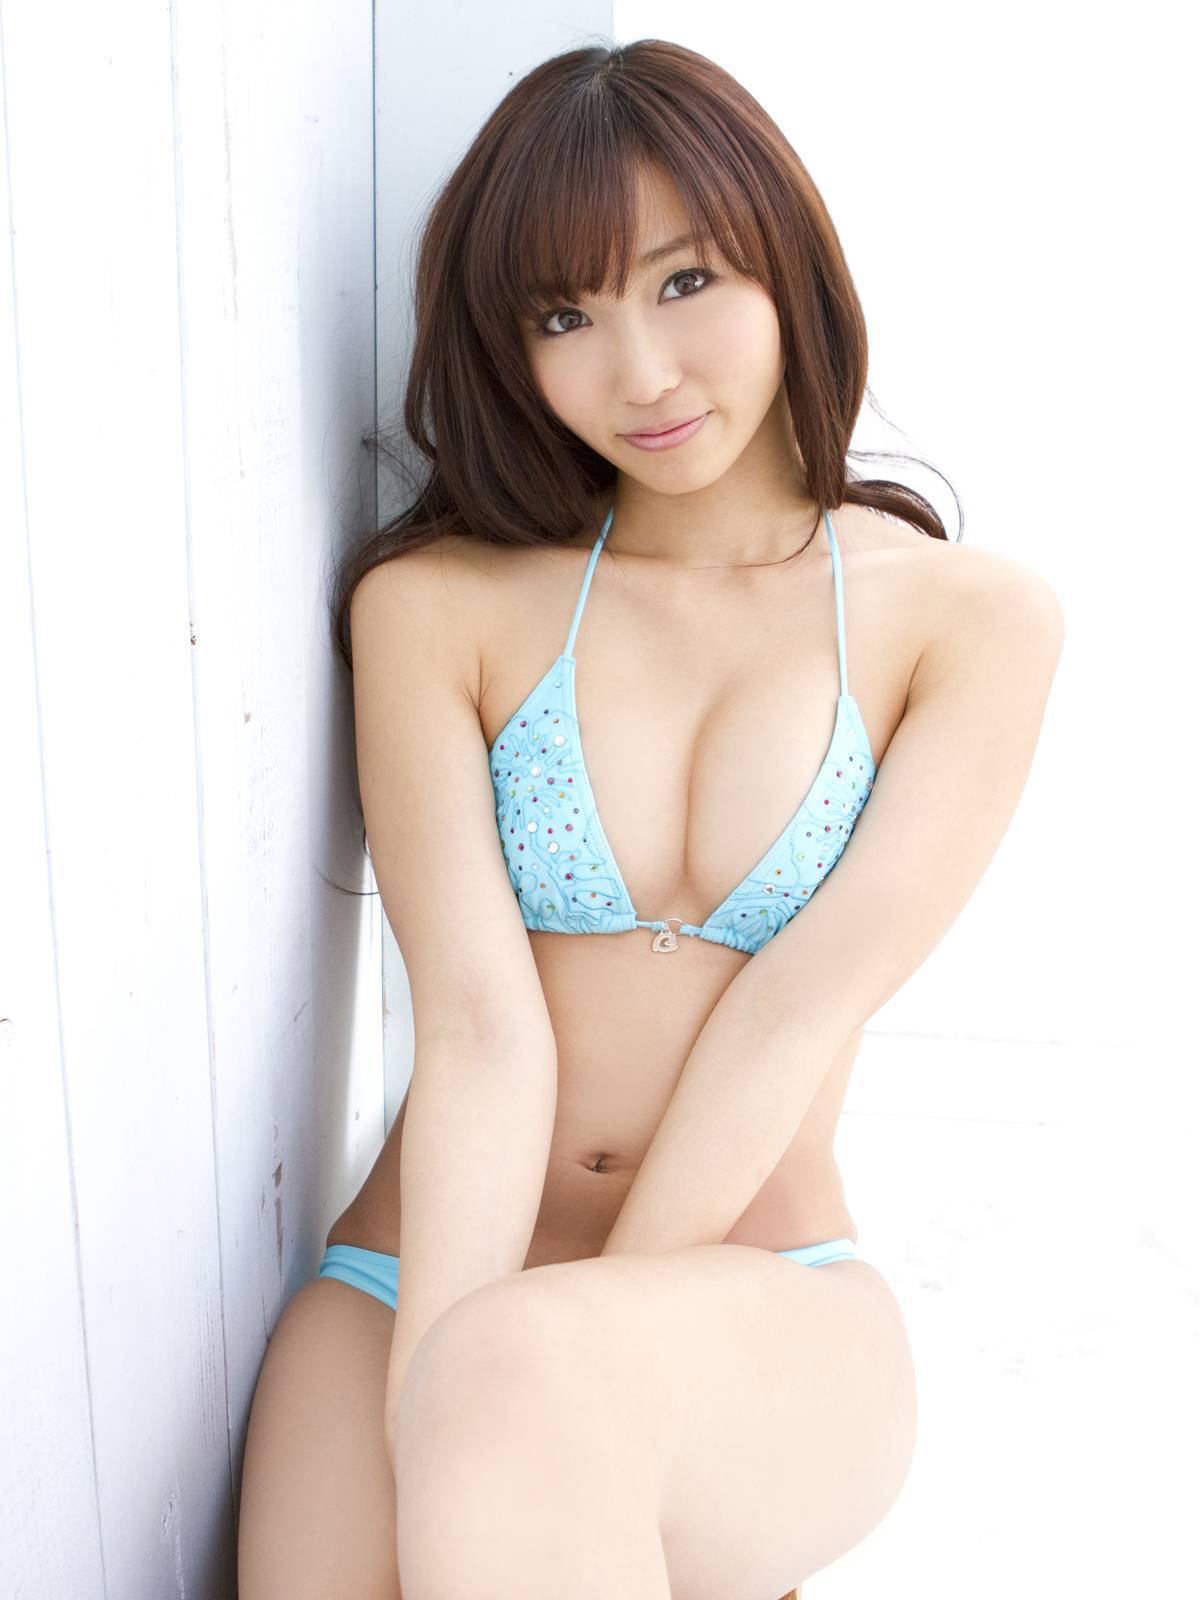 吉木りさ[Sabra] [01-12] stgirls 网络最全日本美女图片资源站点